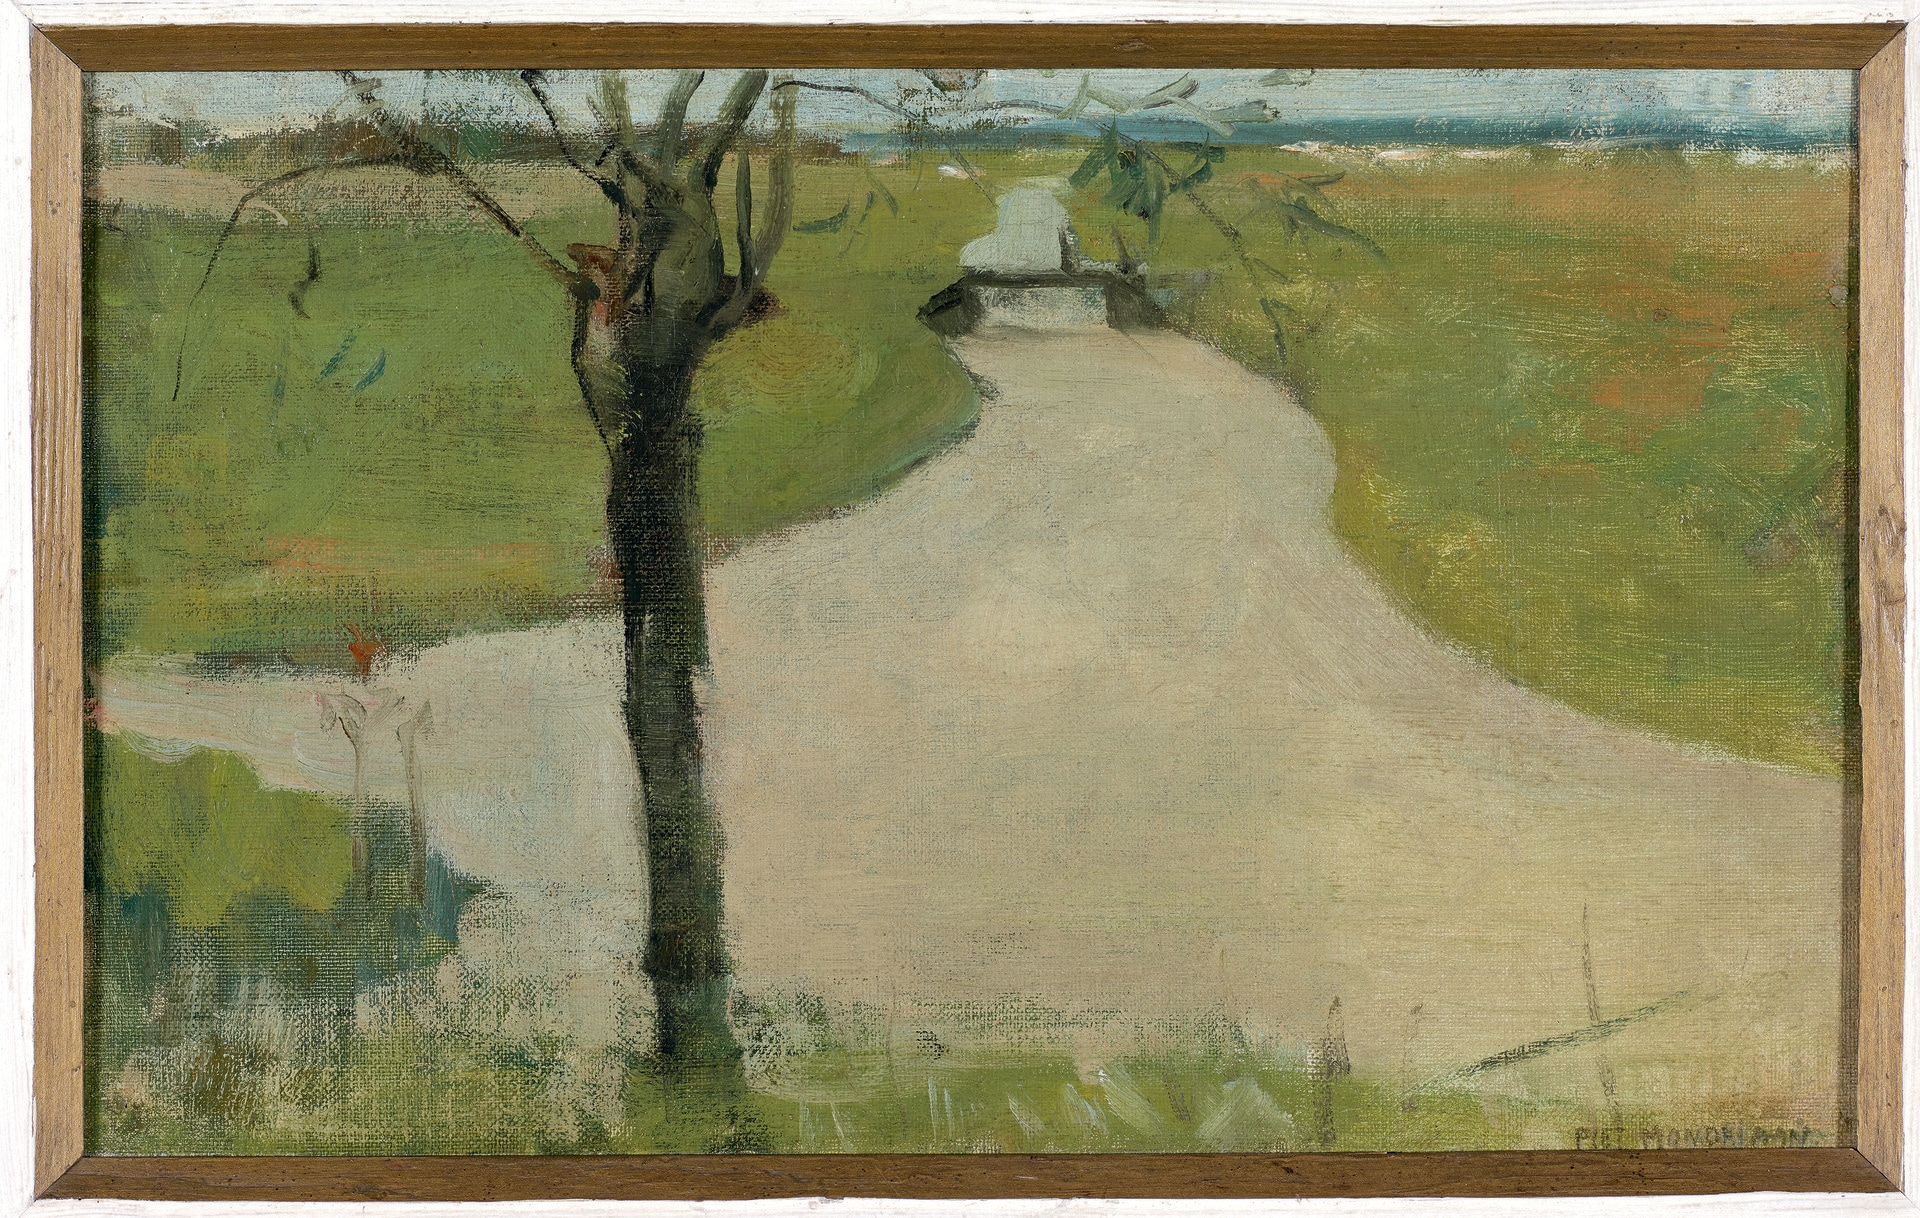 Piet Mondrian (1872-1944): Fosso vicino alla fattoria Landzicht, c. 1900. Olio su tela. Kunstmuseum Den Haag